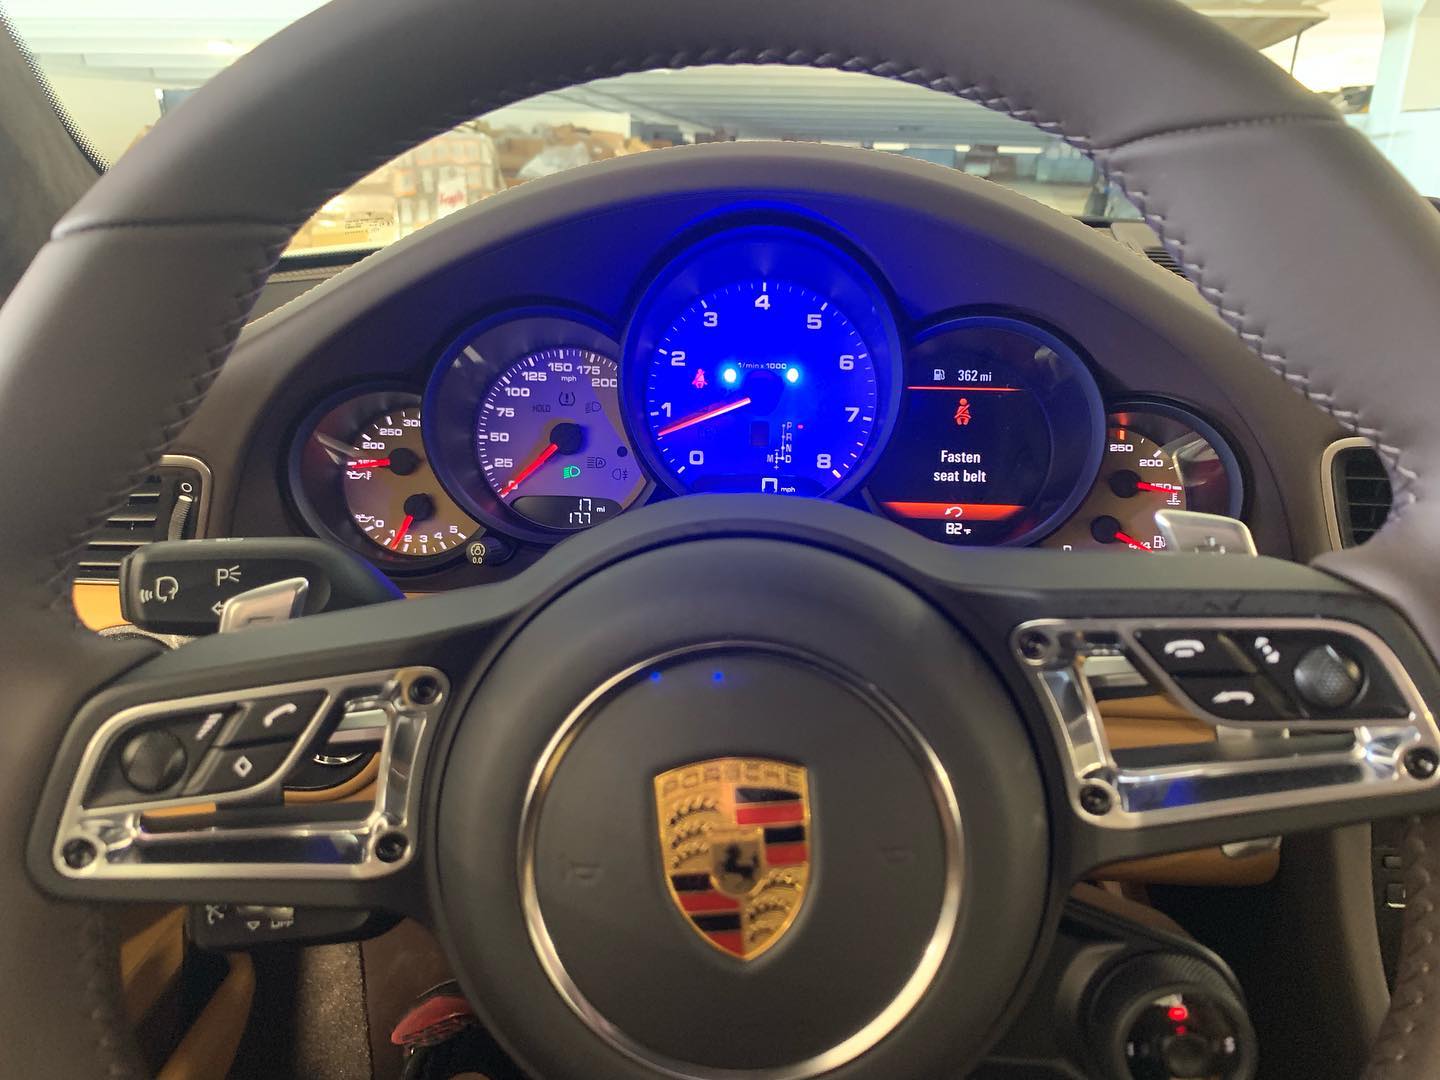 Custom K40 Police Radar Detector Alert LED's Installed on New 2019 Porsche Carrera in Boca Raton, FL